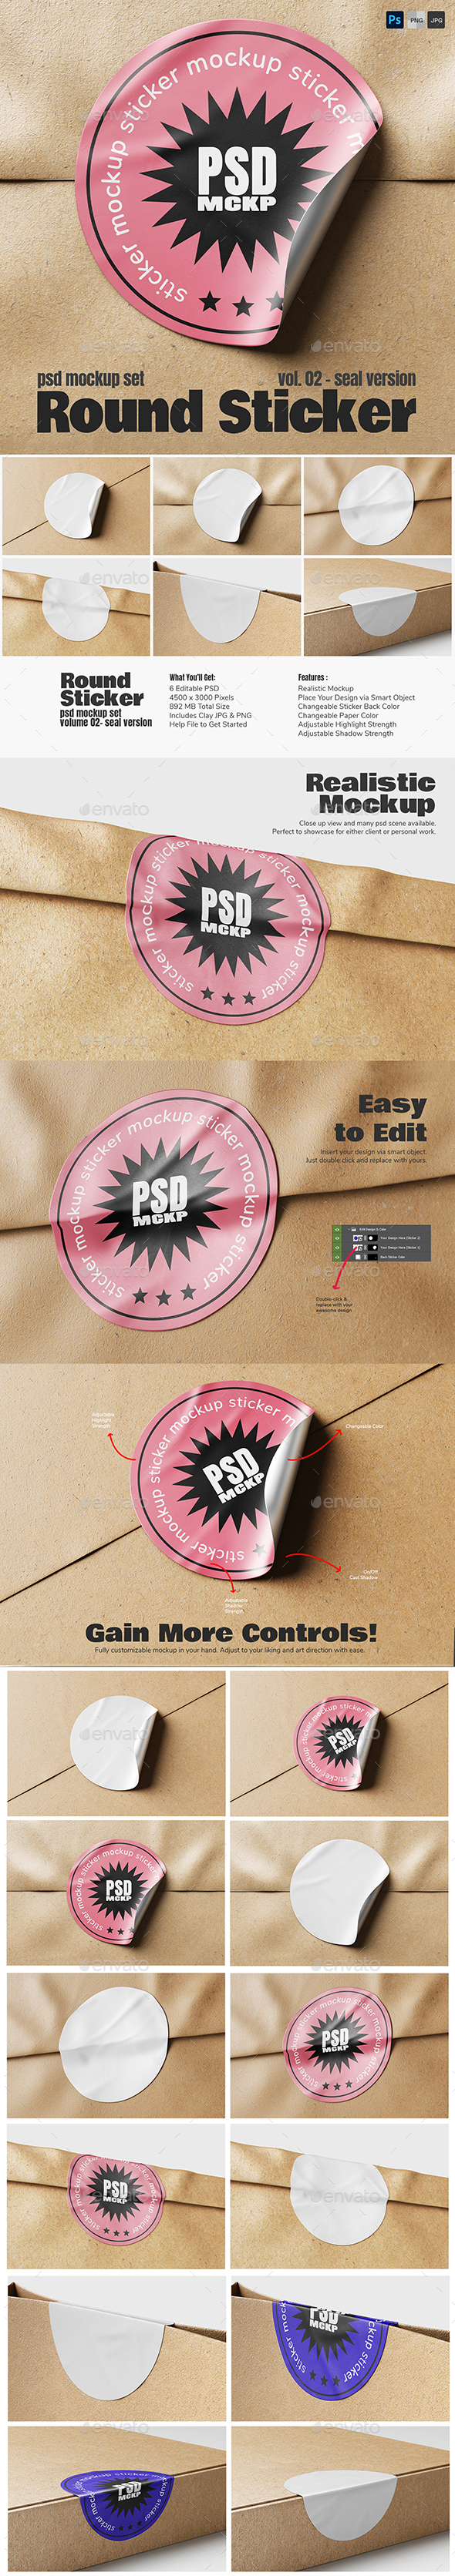 [DOWNLOAD]Round Sticker Label PSD Mockup Set - Vol. 02 - Seal Version